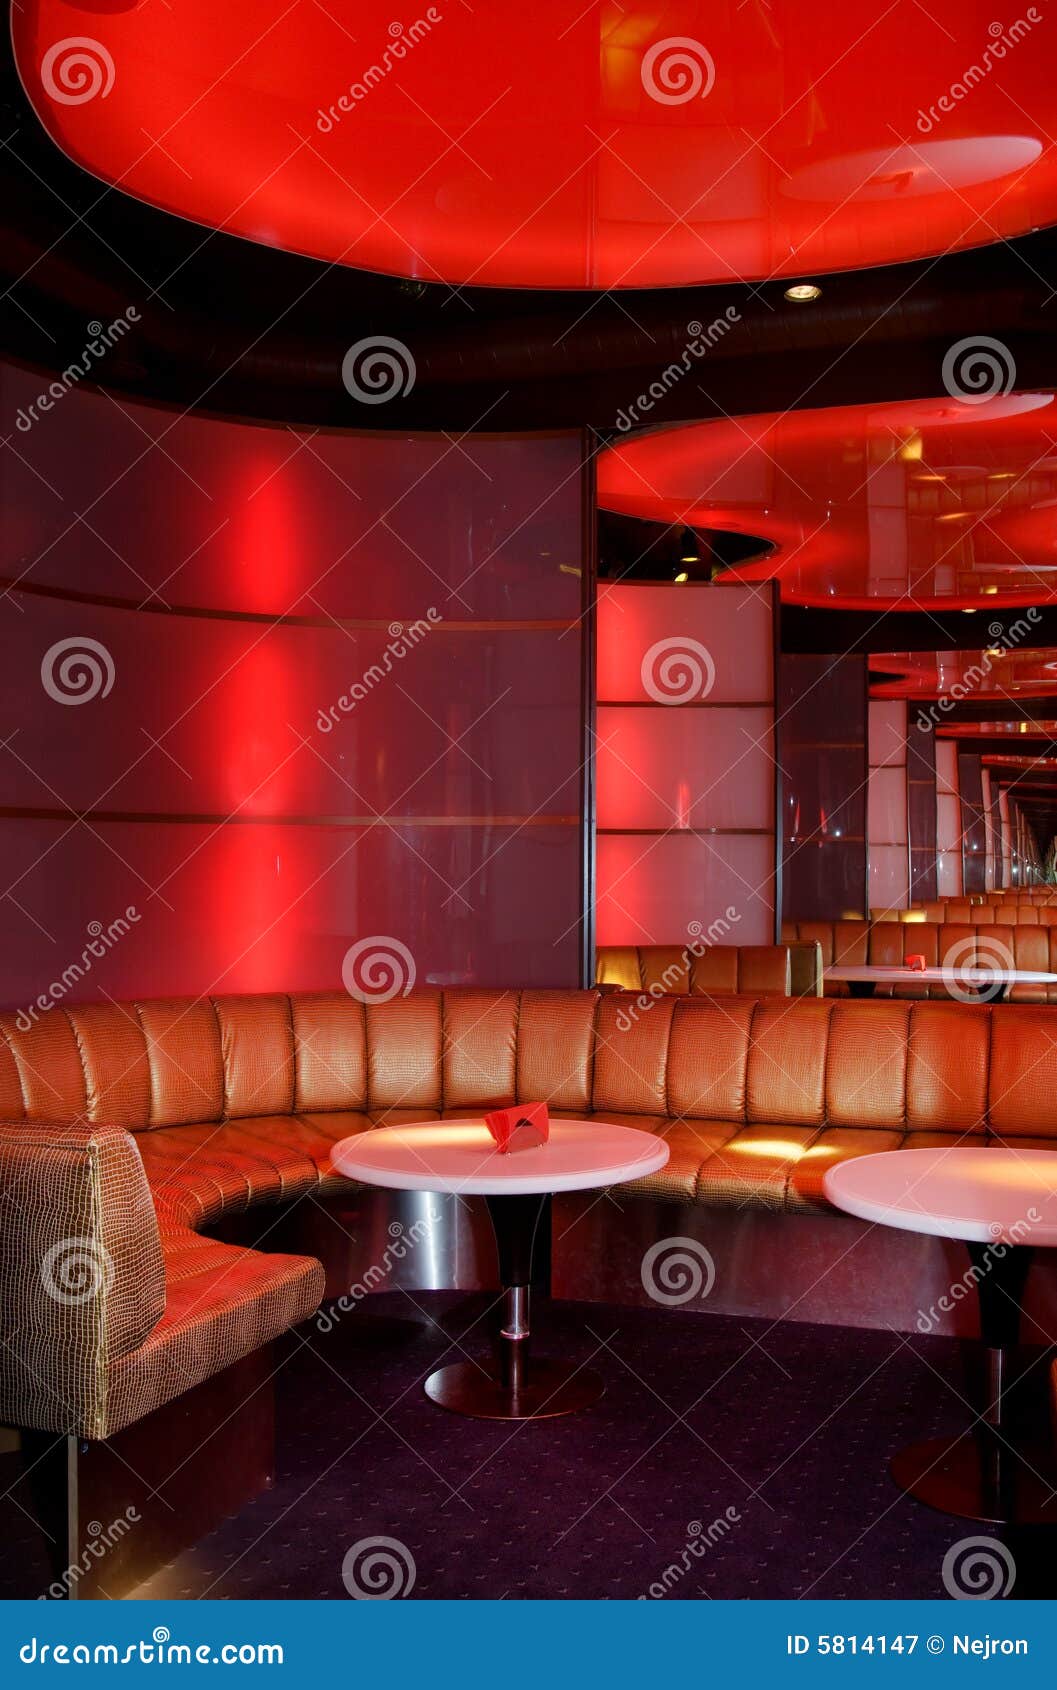 nightclub interior